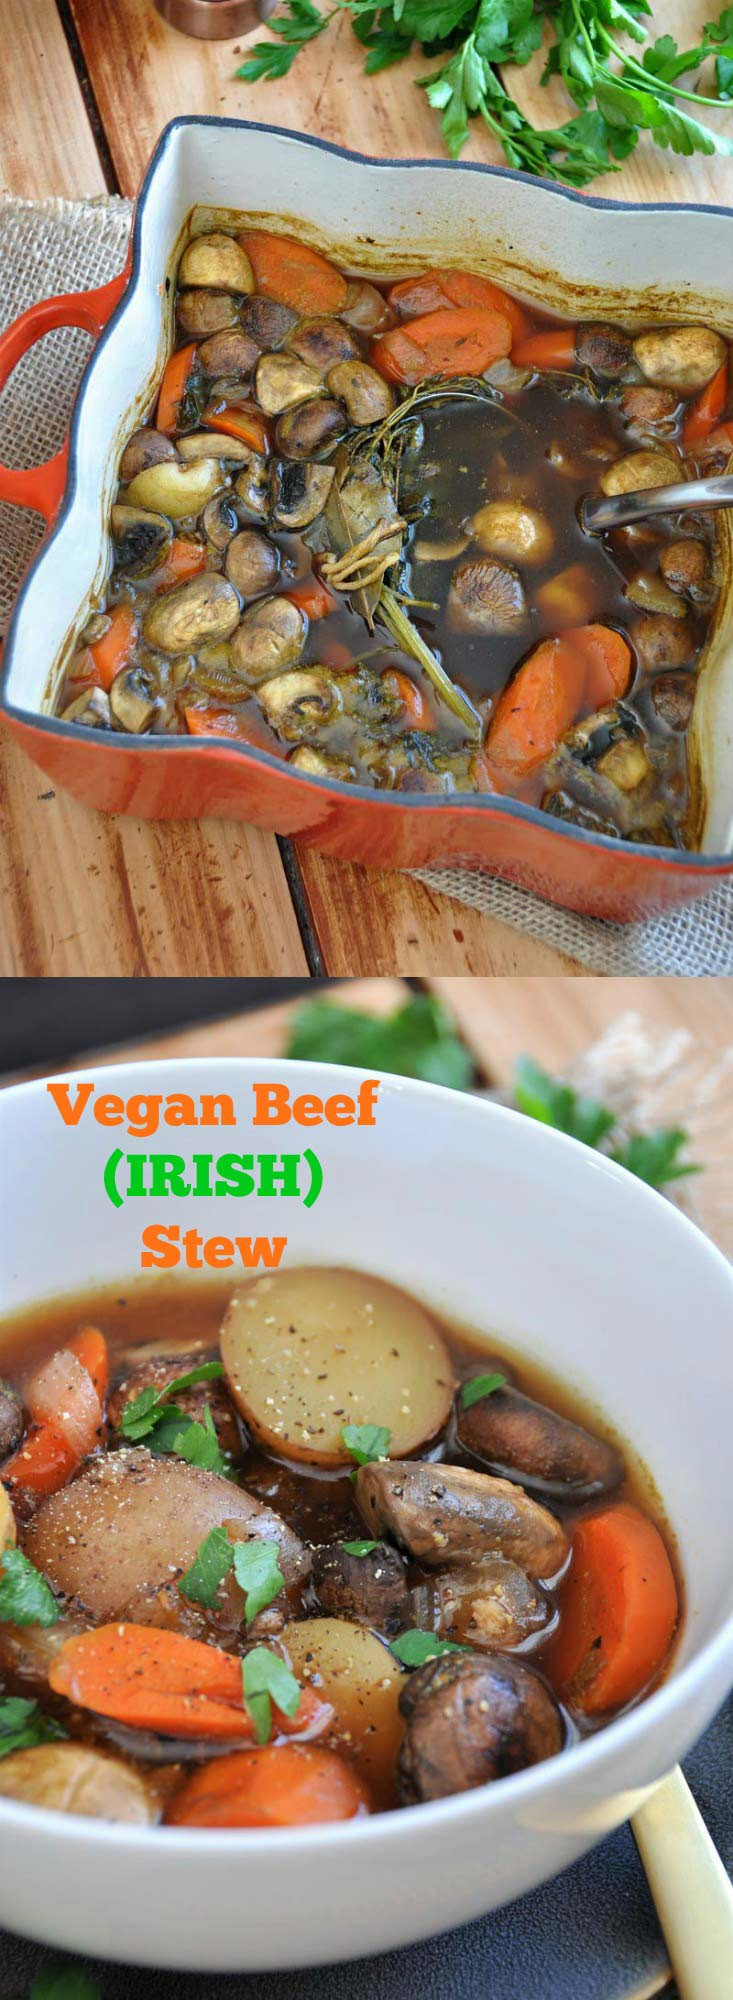 Vegan Beef Stew
 Vegan Beef Irish Stew Veganosity